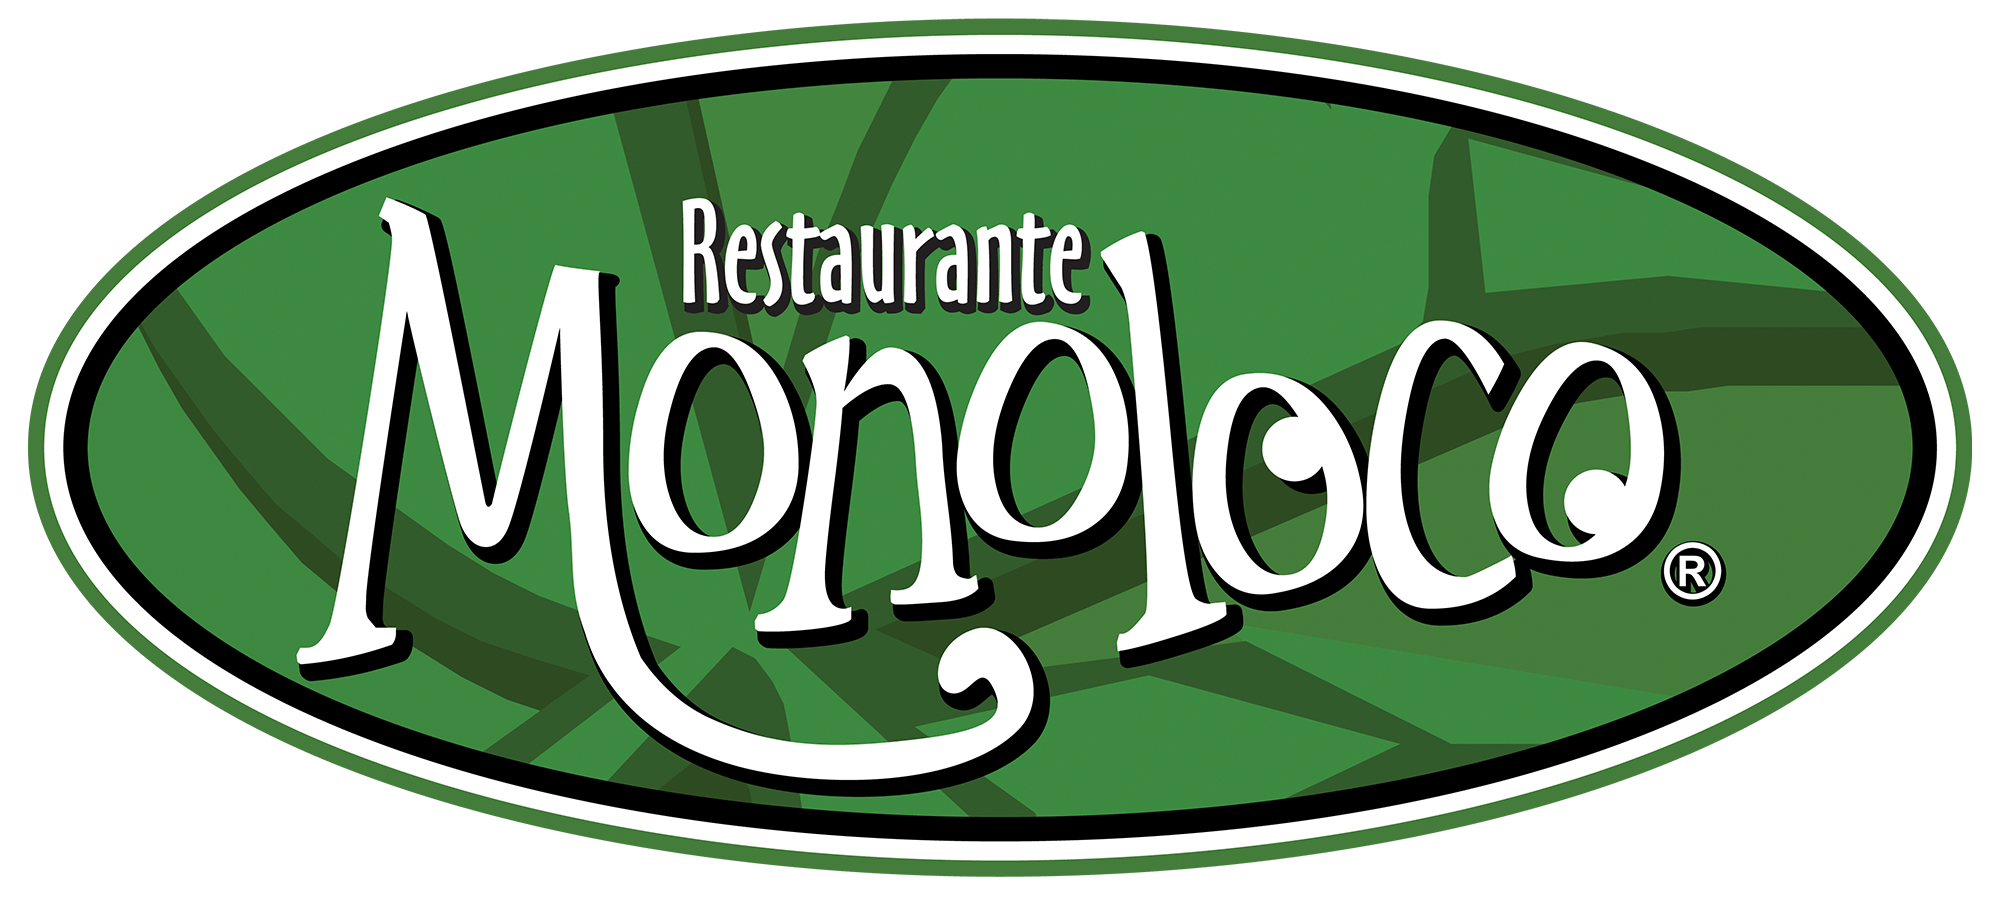 monoloco-logo